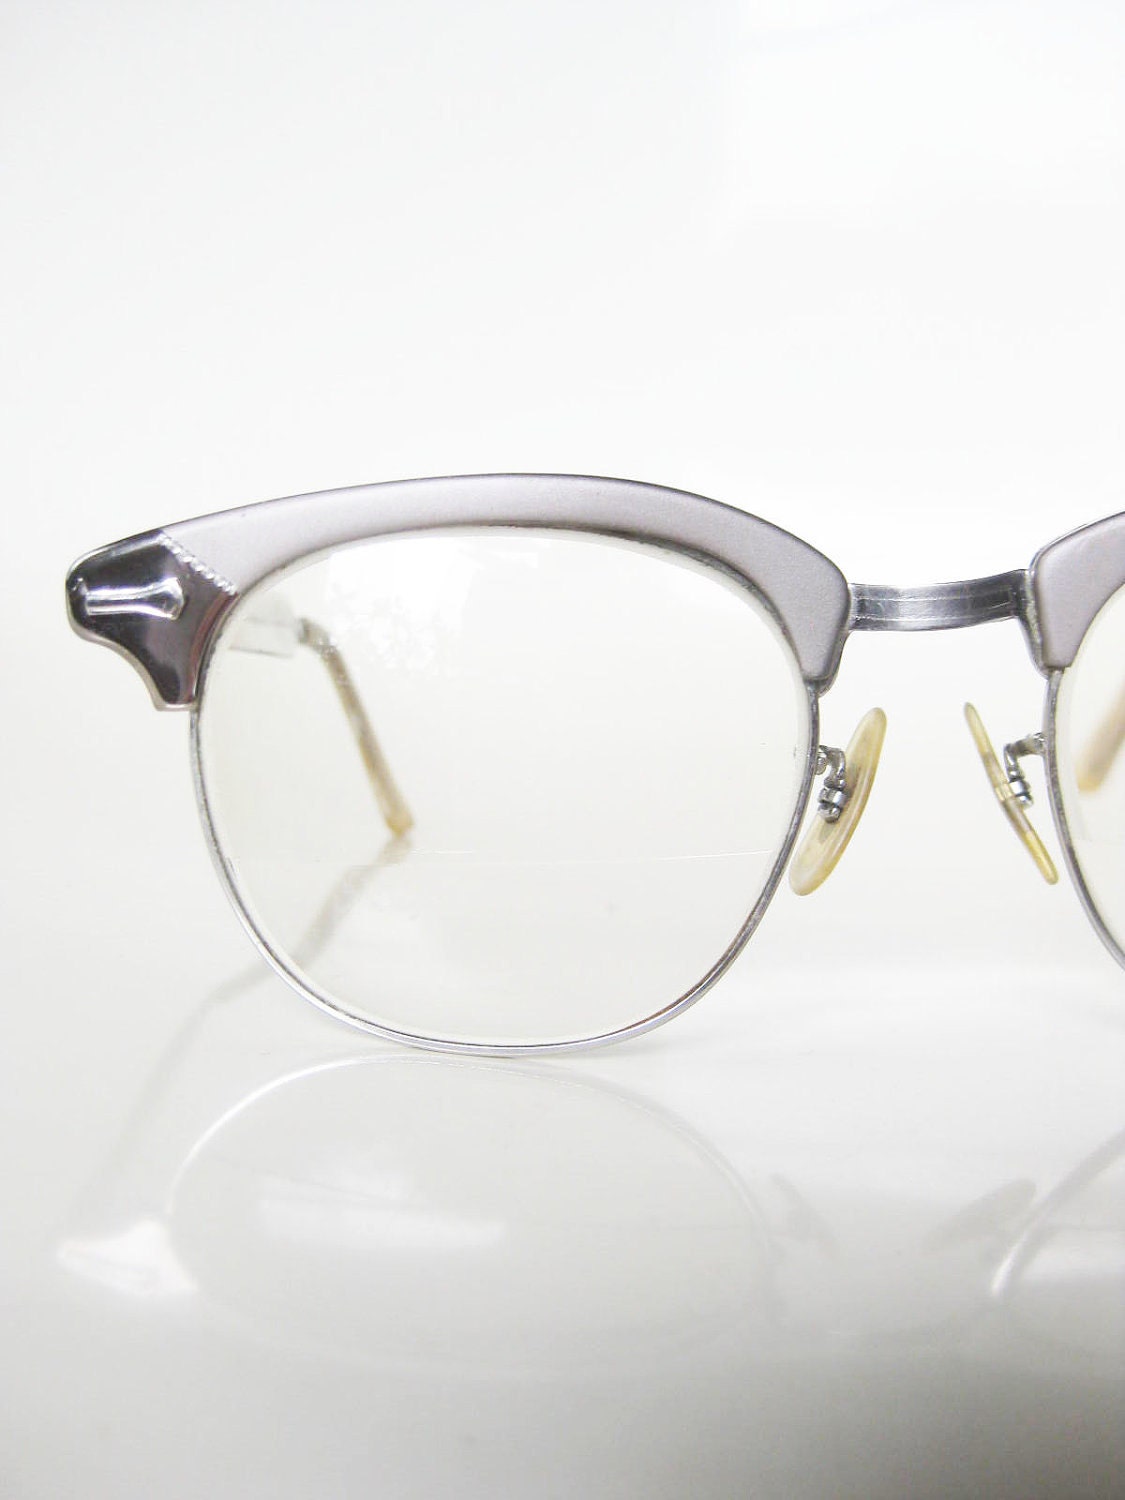 Vintage 1950s Cat Eye Shuron Eyeglasses Glasses By Oliverandalexa